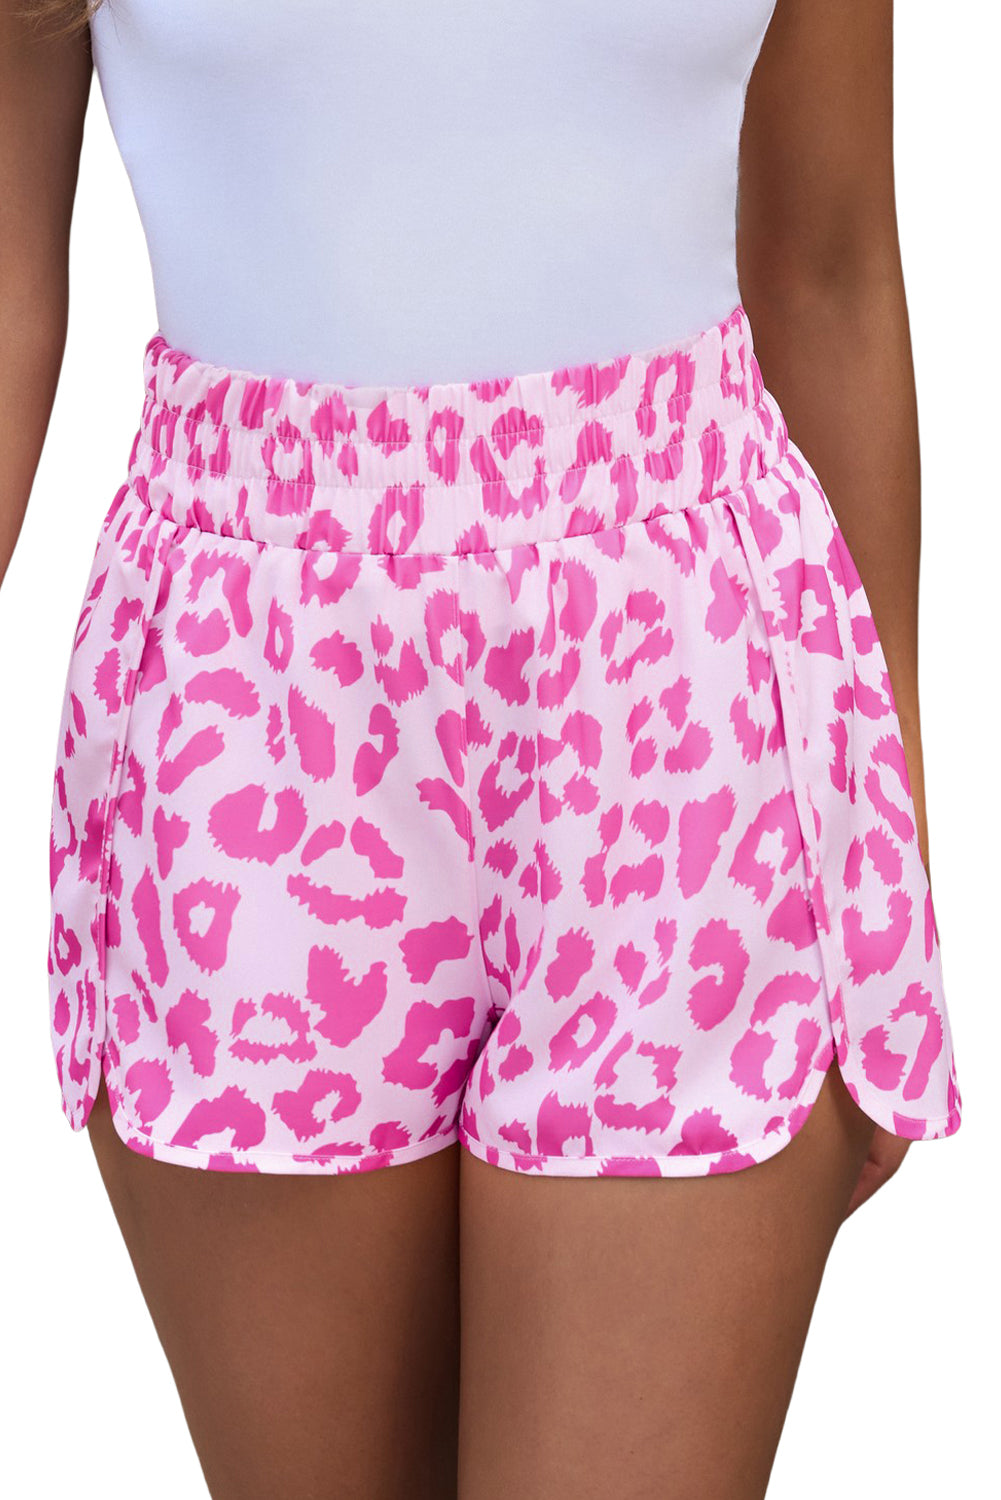 Leopard or checkered Elastic Waist Shorts